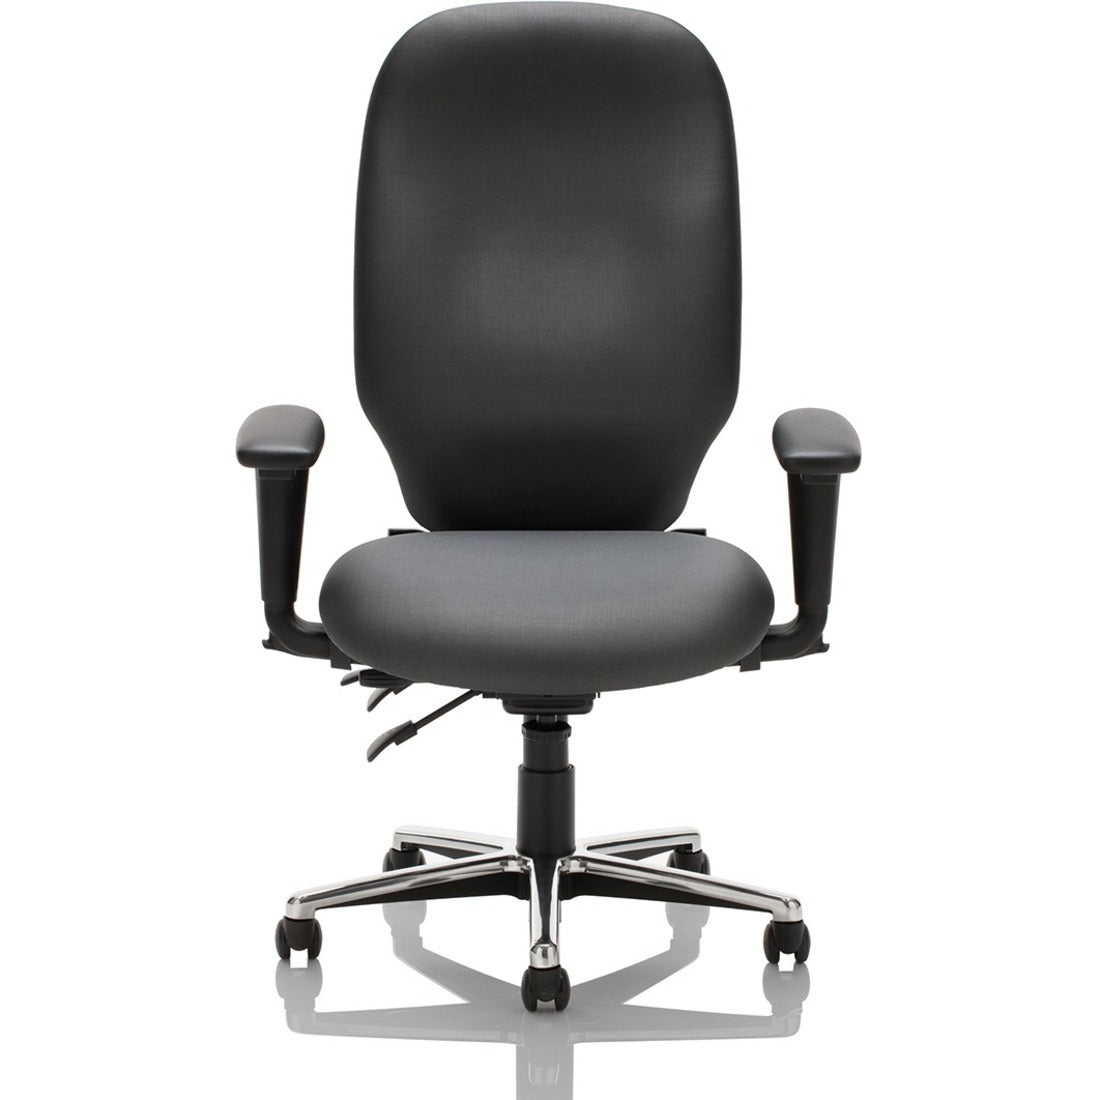 united-chair-savvy-svx16-executive-chair-spring-seat-spring-back-5-star-base-1-each_uncsvx16qa06 - 1